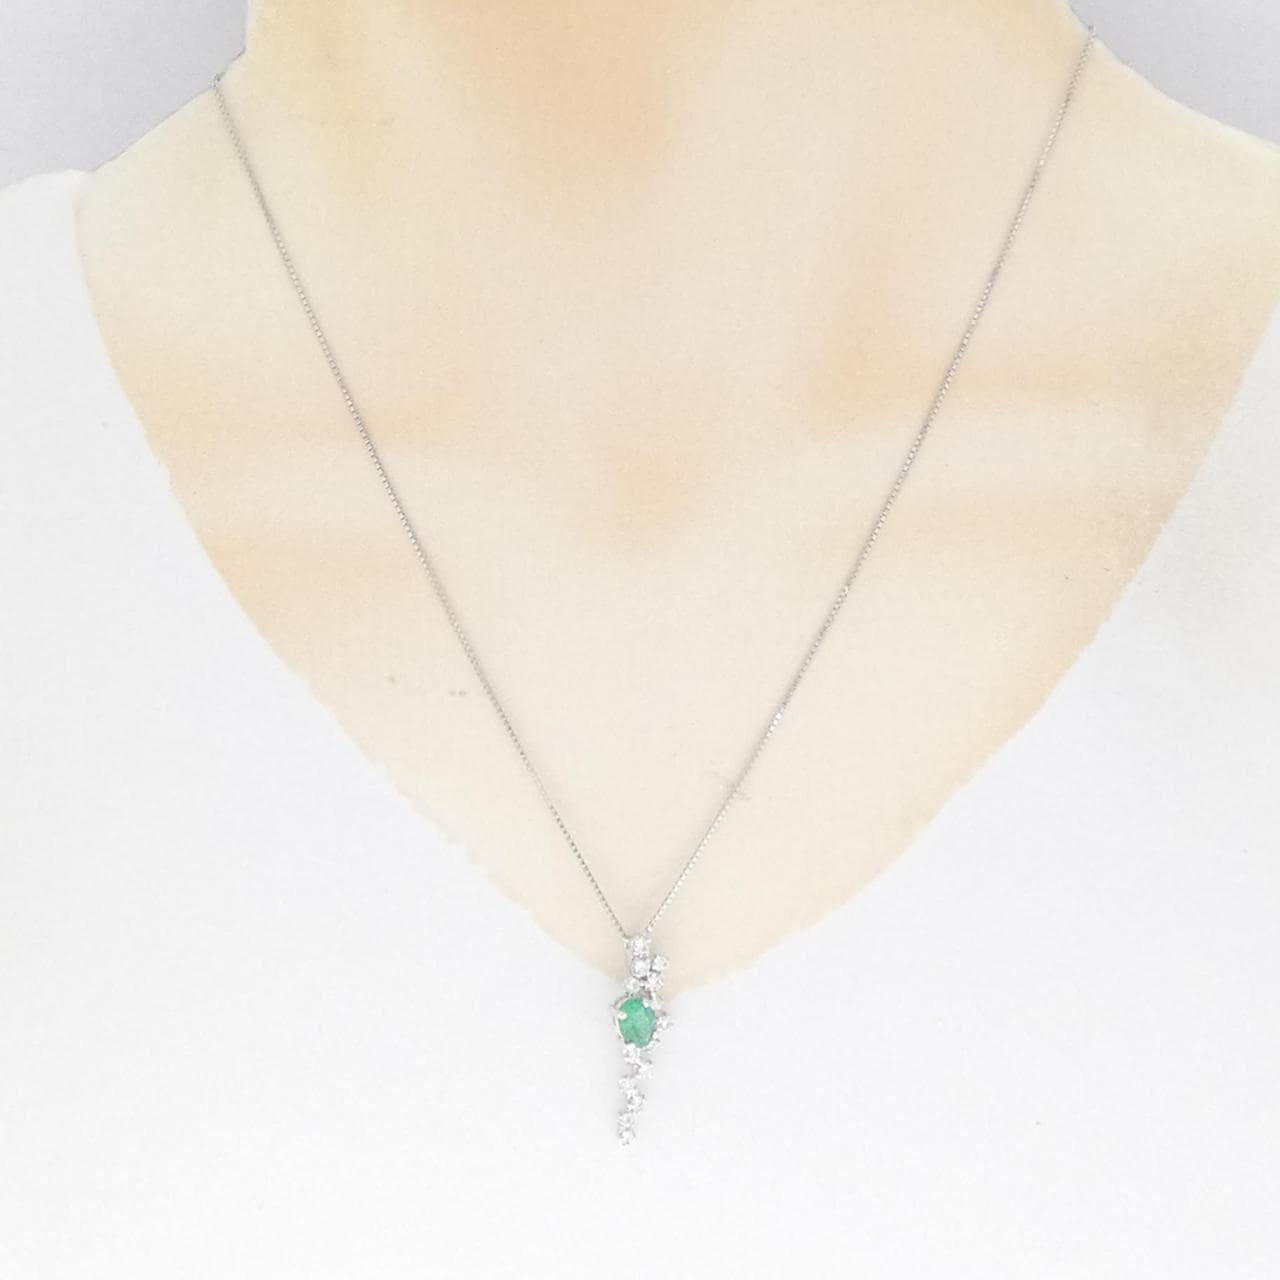 K18WG emerald necklace 0.60CT